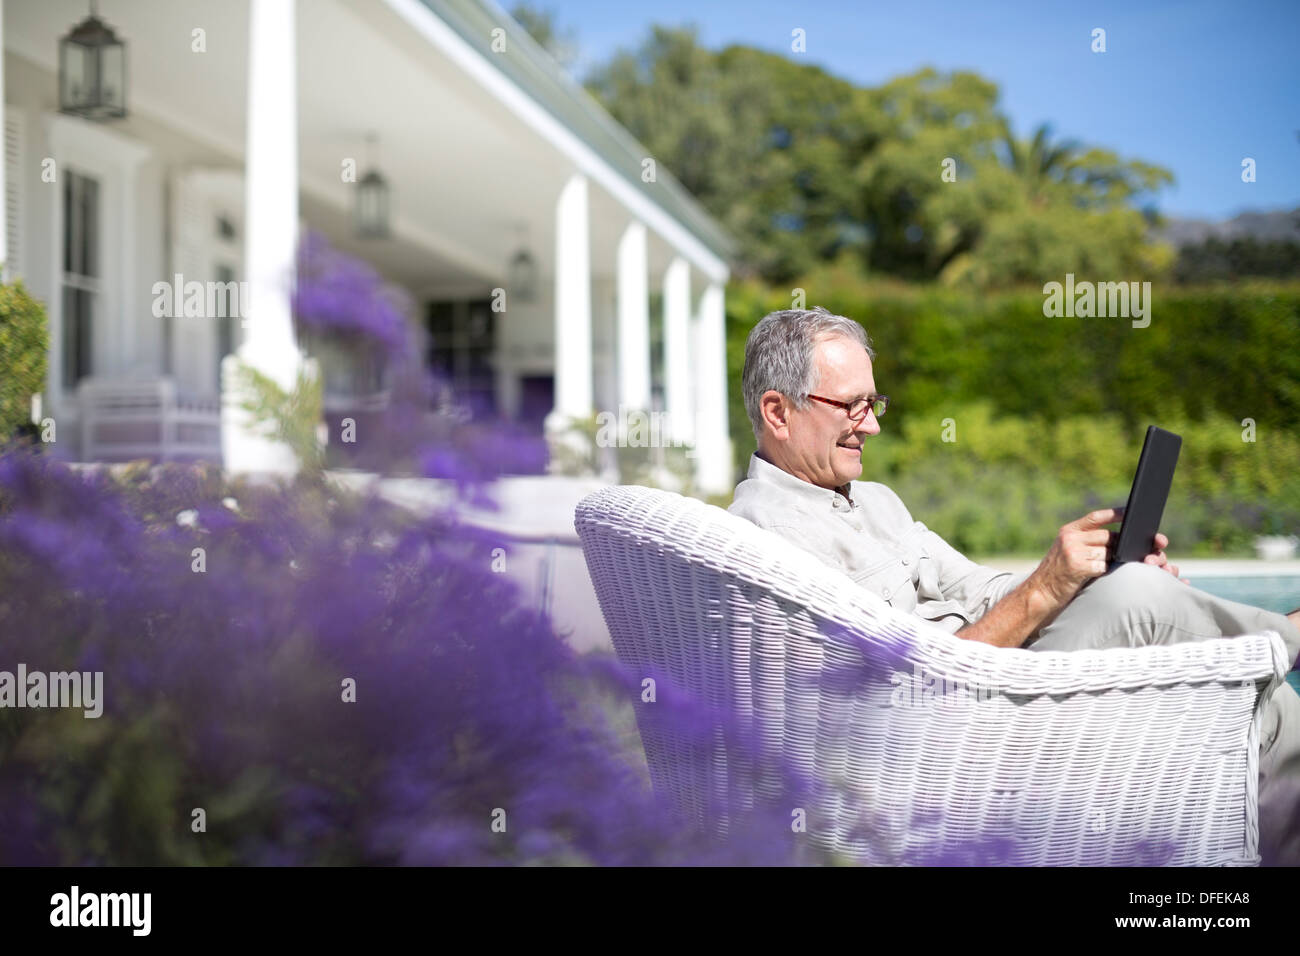 Senior man using digital tablet in garden Stock Photo